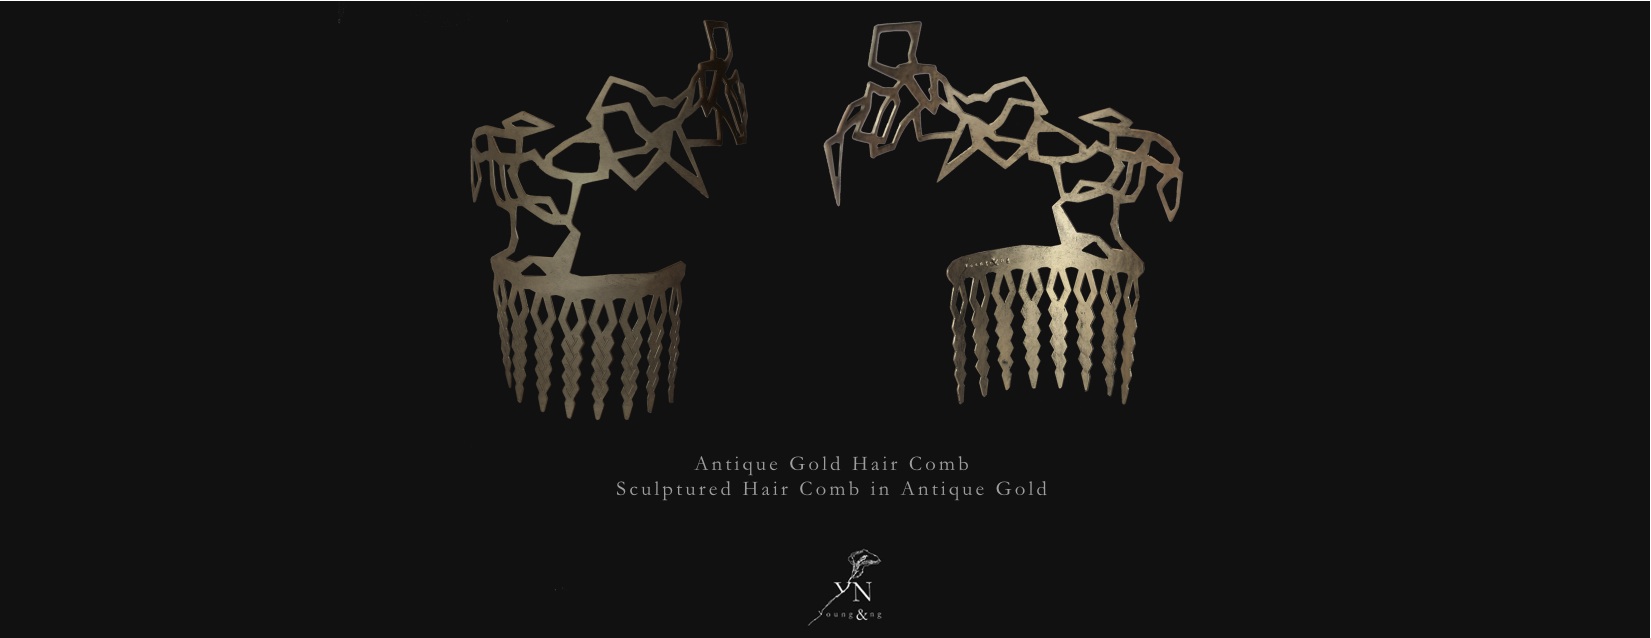 Young&ng - Antique Gold Hair Comb.jpg